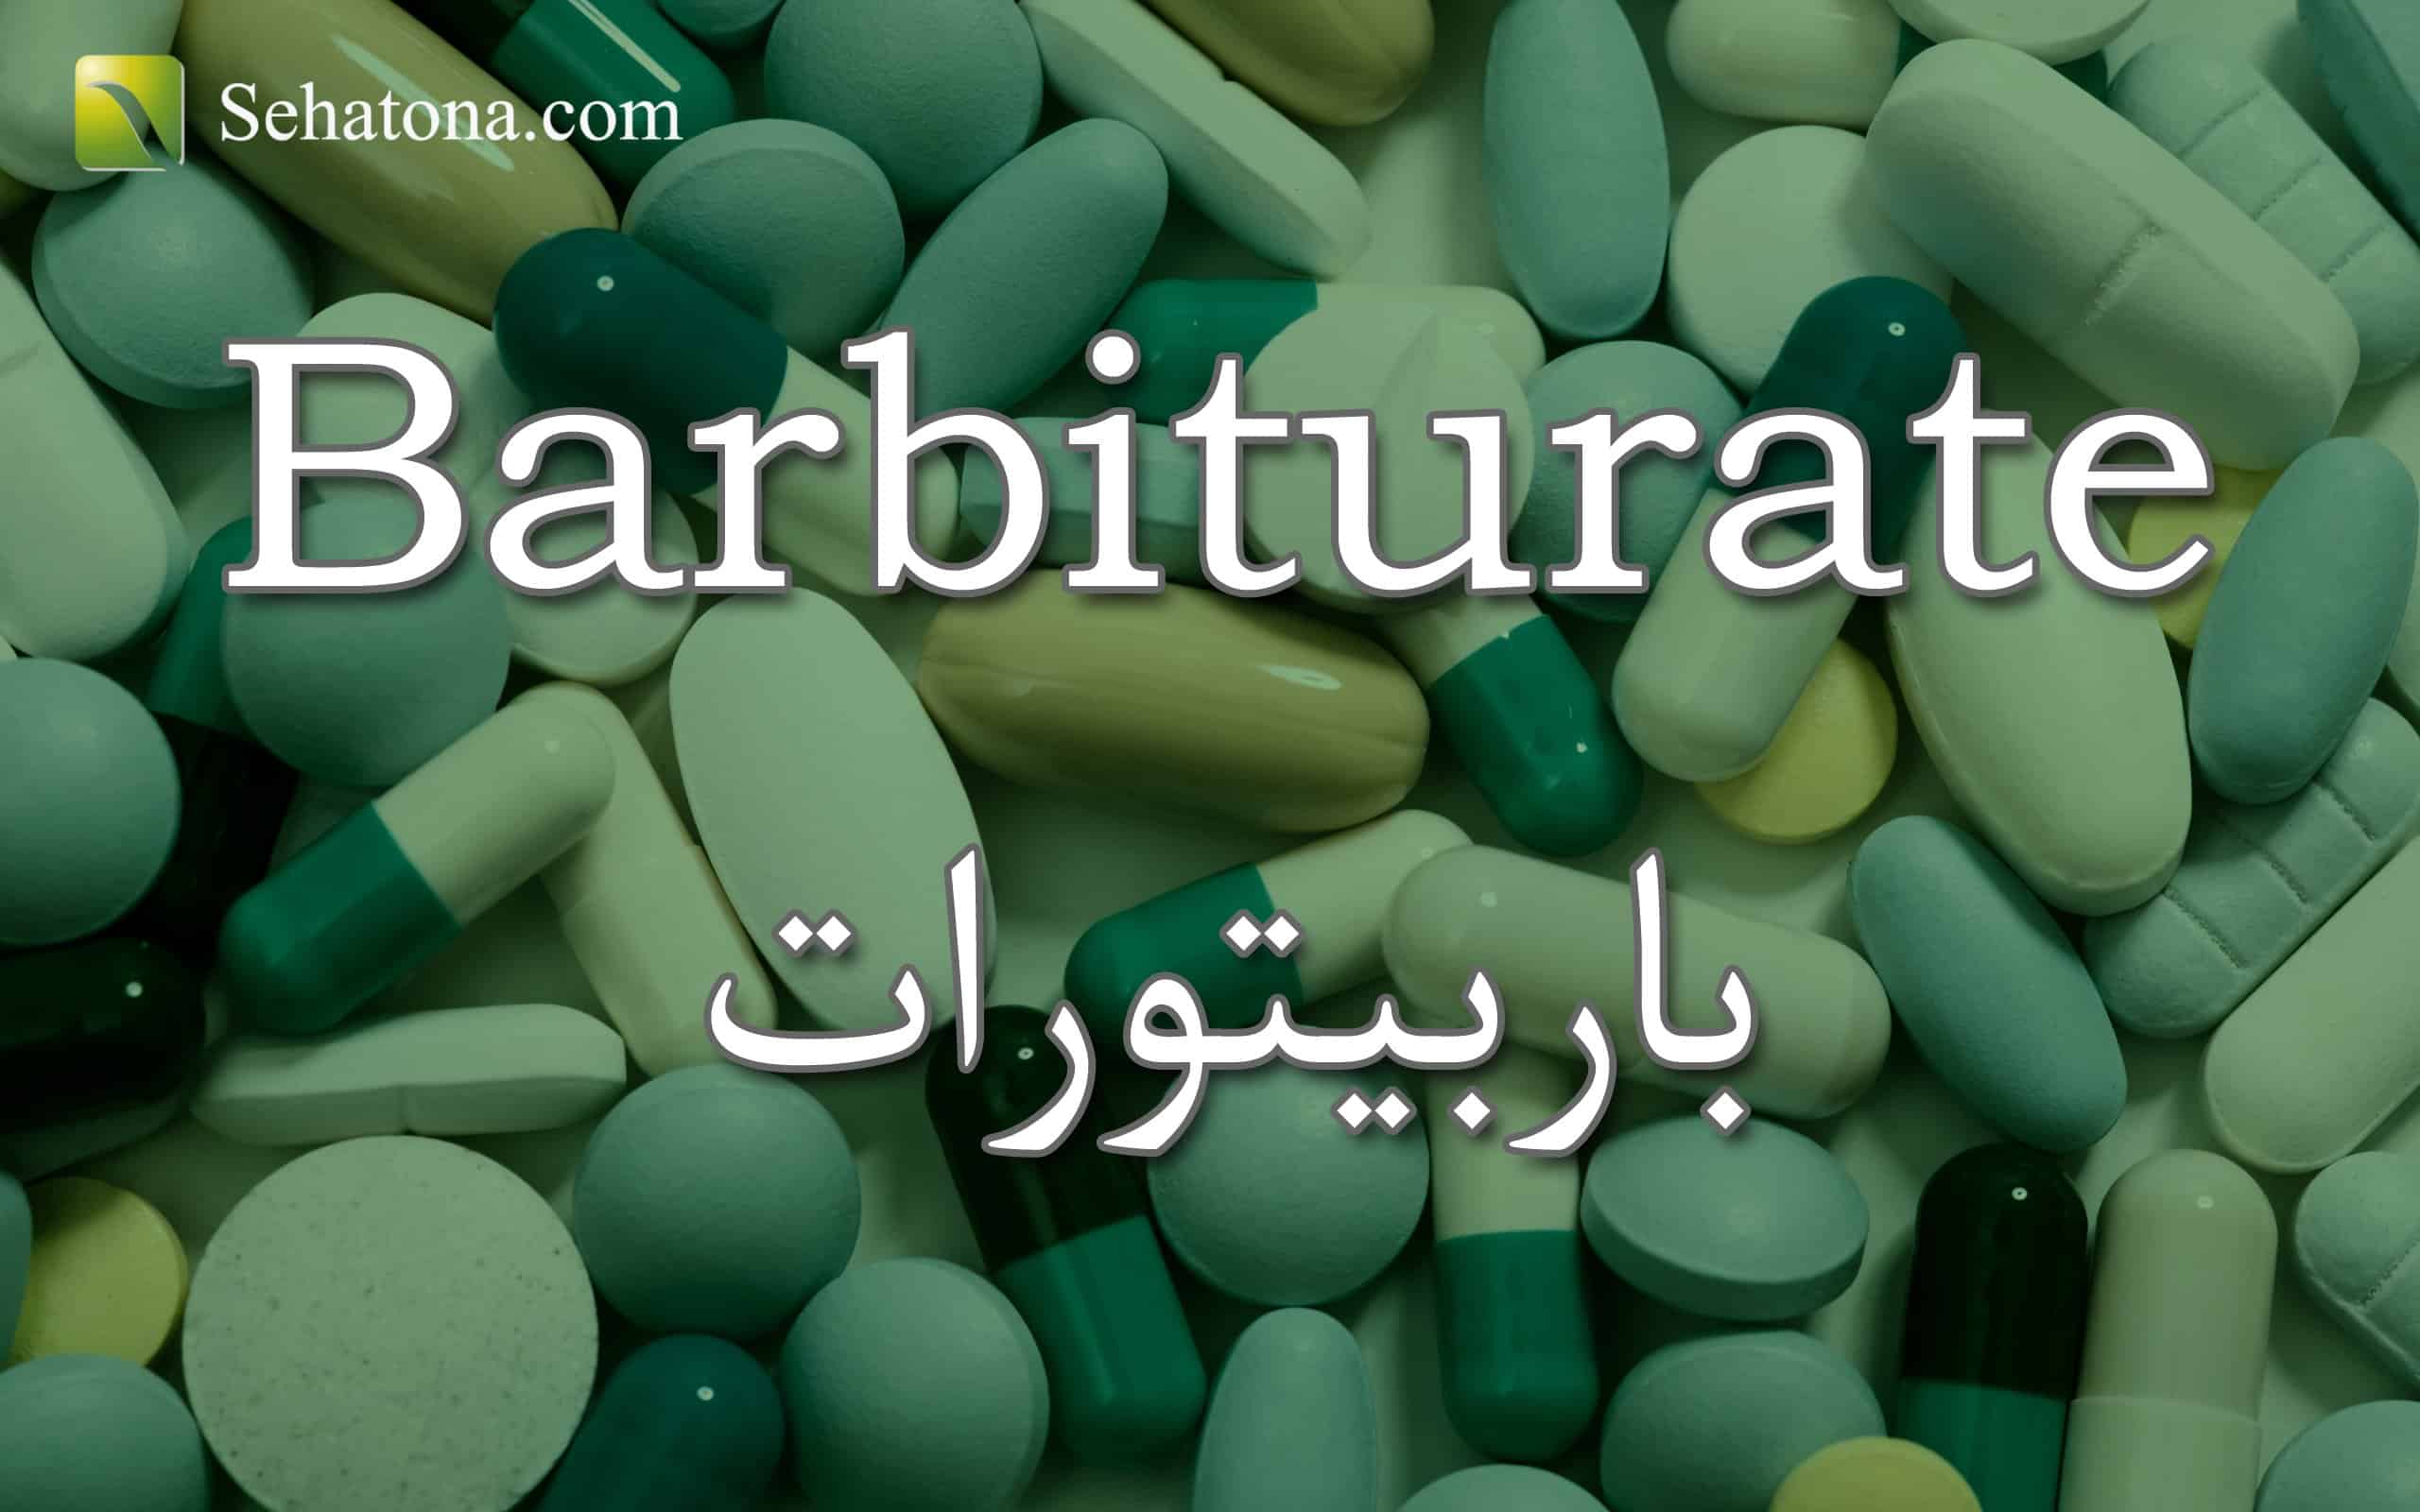 Barbiturate